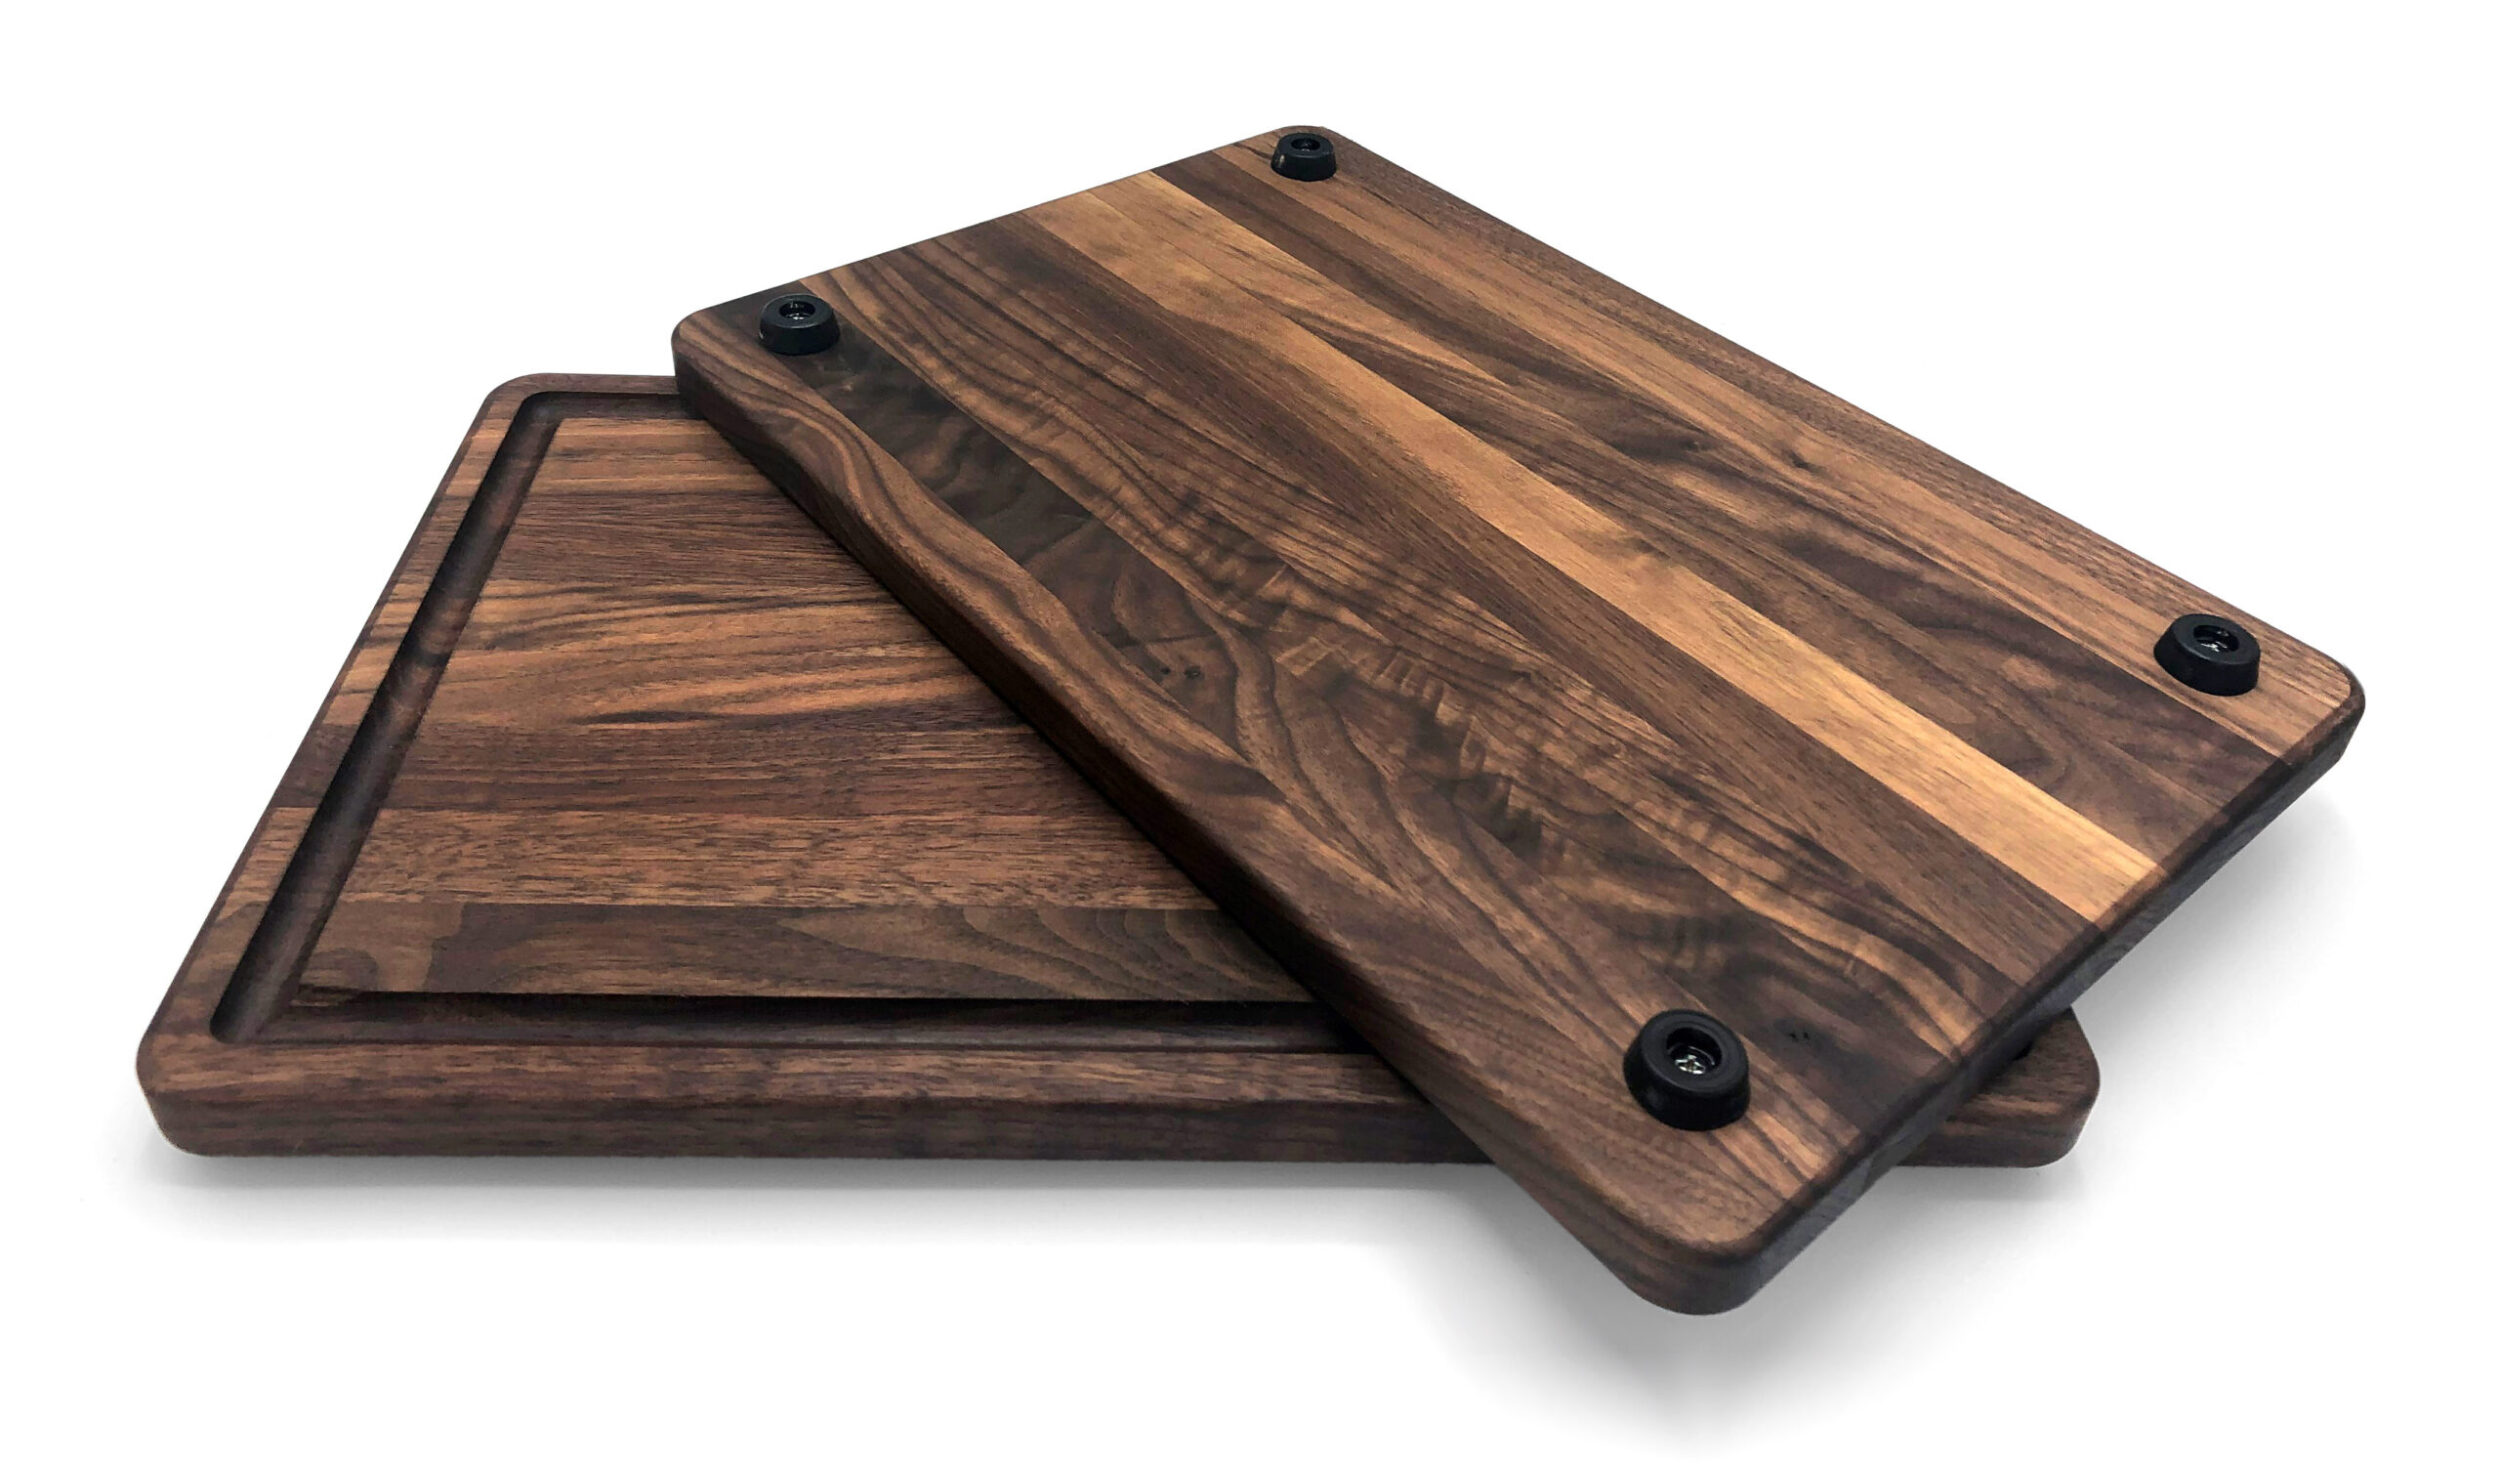 https://moslowwood.com/wp-content/uploads/2022/02/10-x-15-x-.75-solid-walnut-cutting-board-with-feet-scaled.jpg